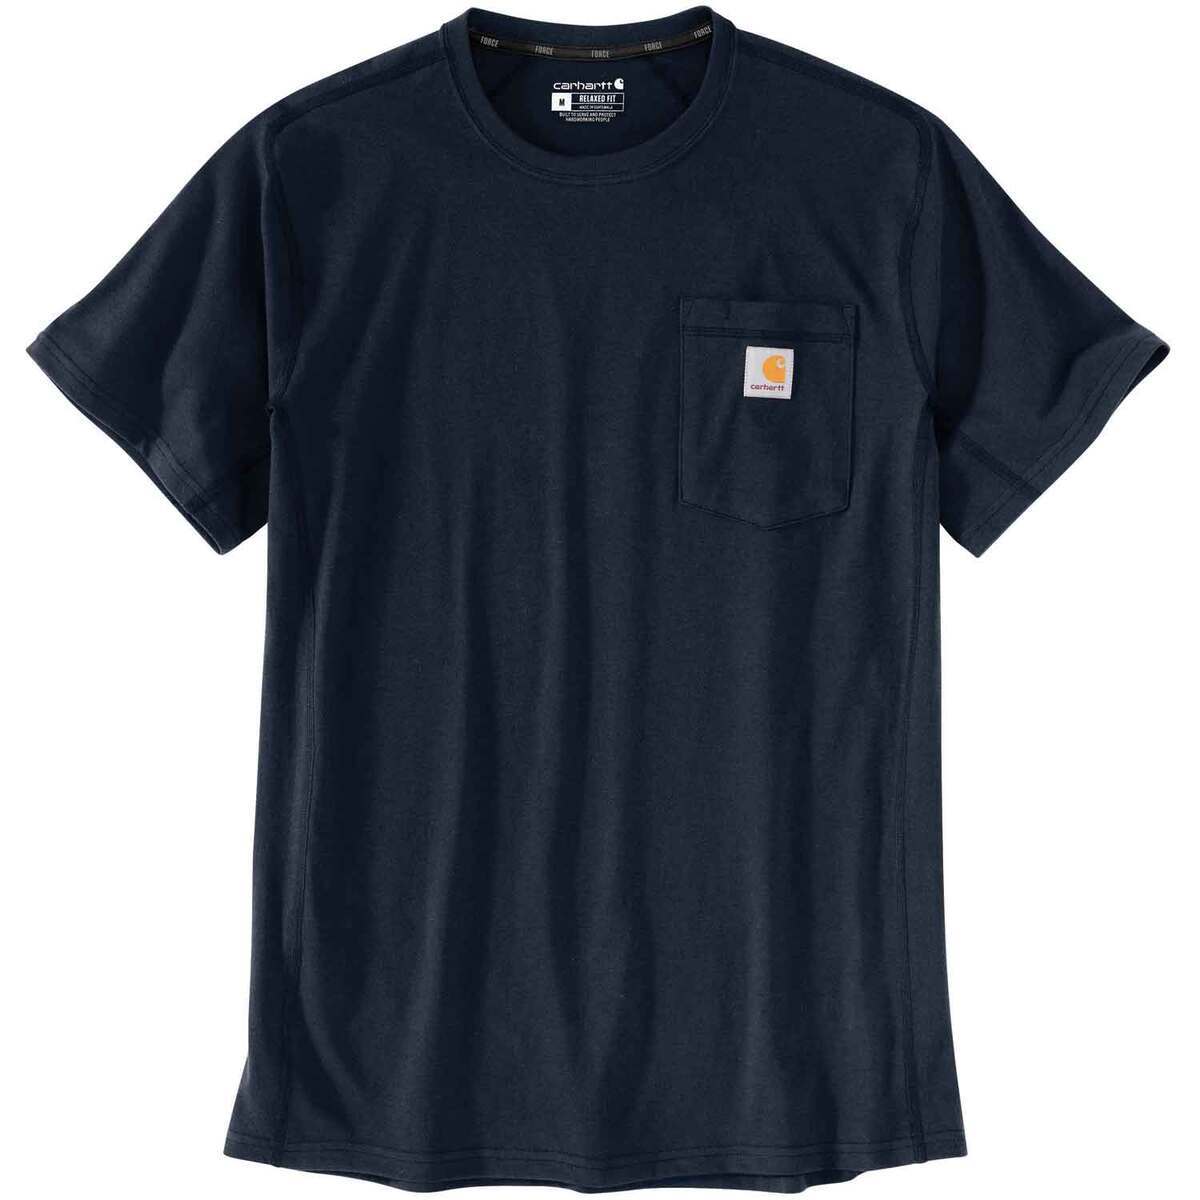 Blue Mountain Men's Long-Sleeve Jersey Crew T-Shirt, Bison Heather, XL